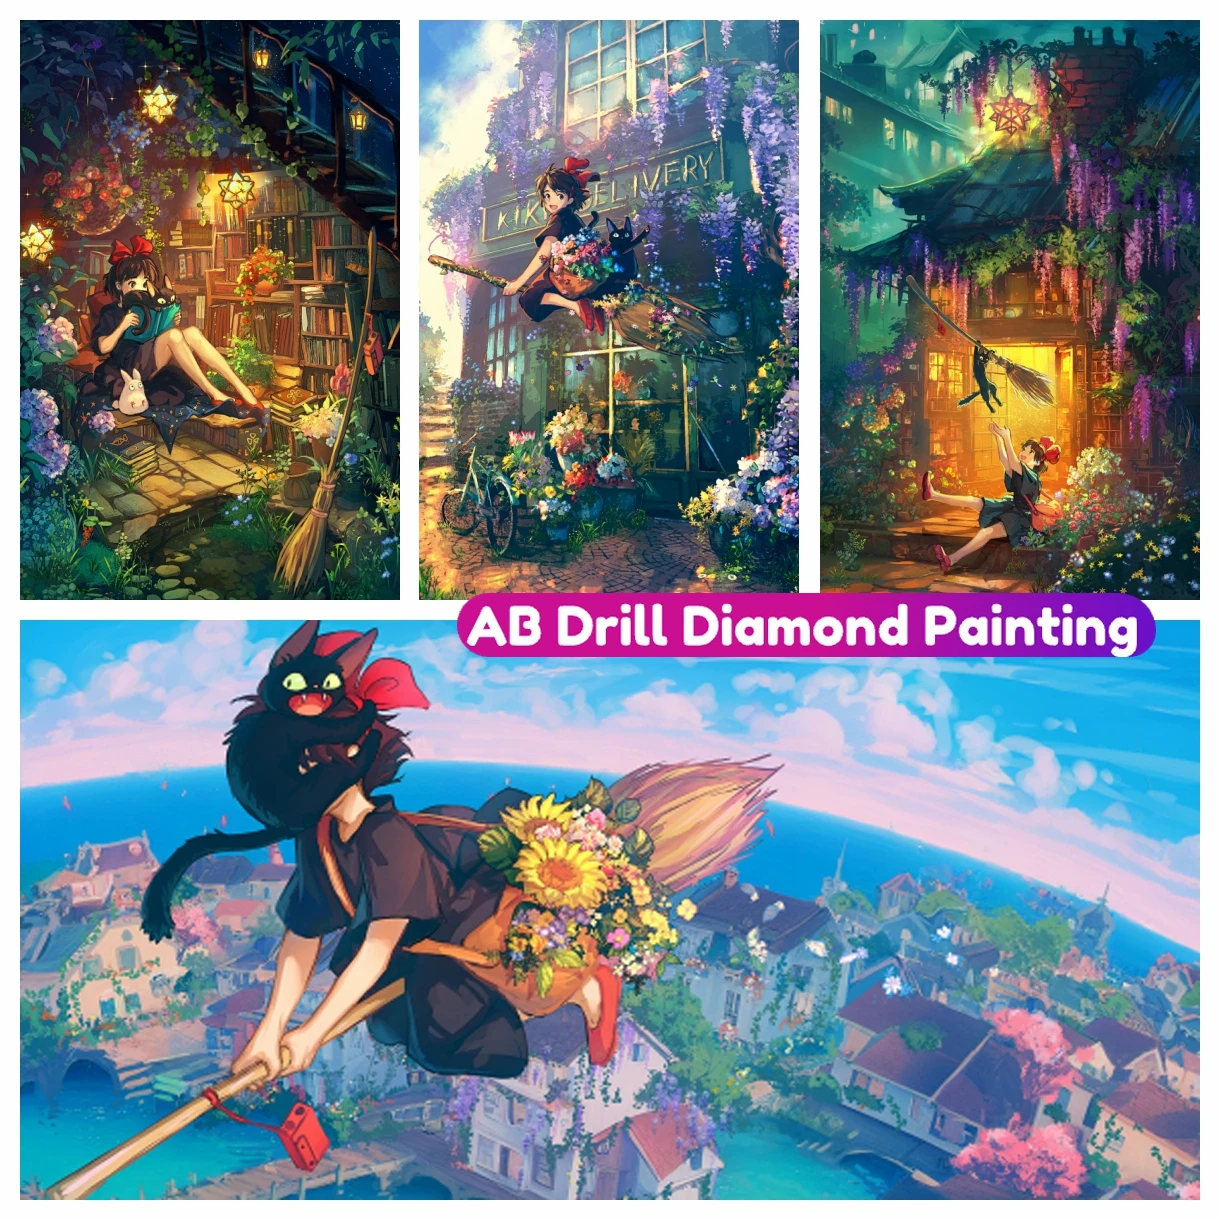 

Kiki Cute Japanese Anime Movie AB Diamond Painting DIY Full Drill Mosaic Embroidery Cross Stitch Kit Home Decor Gift